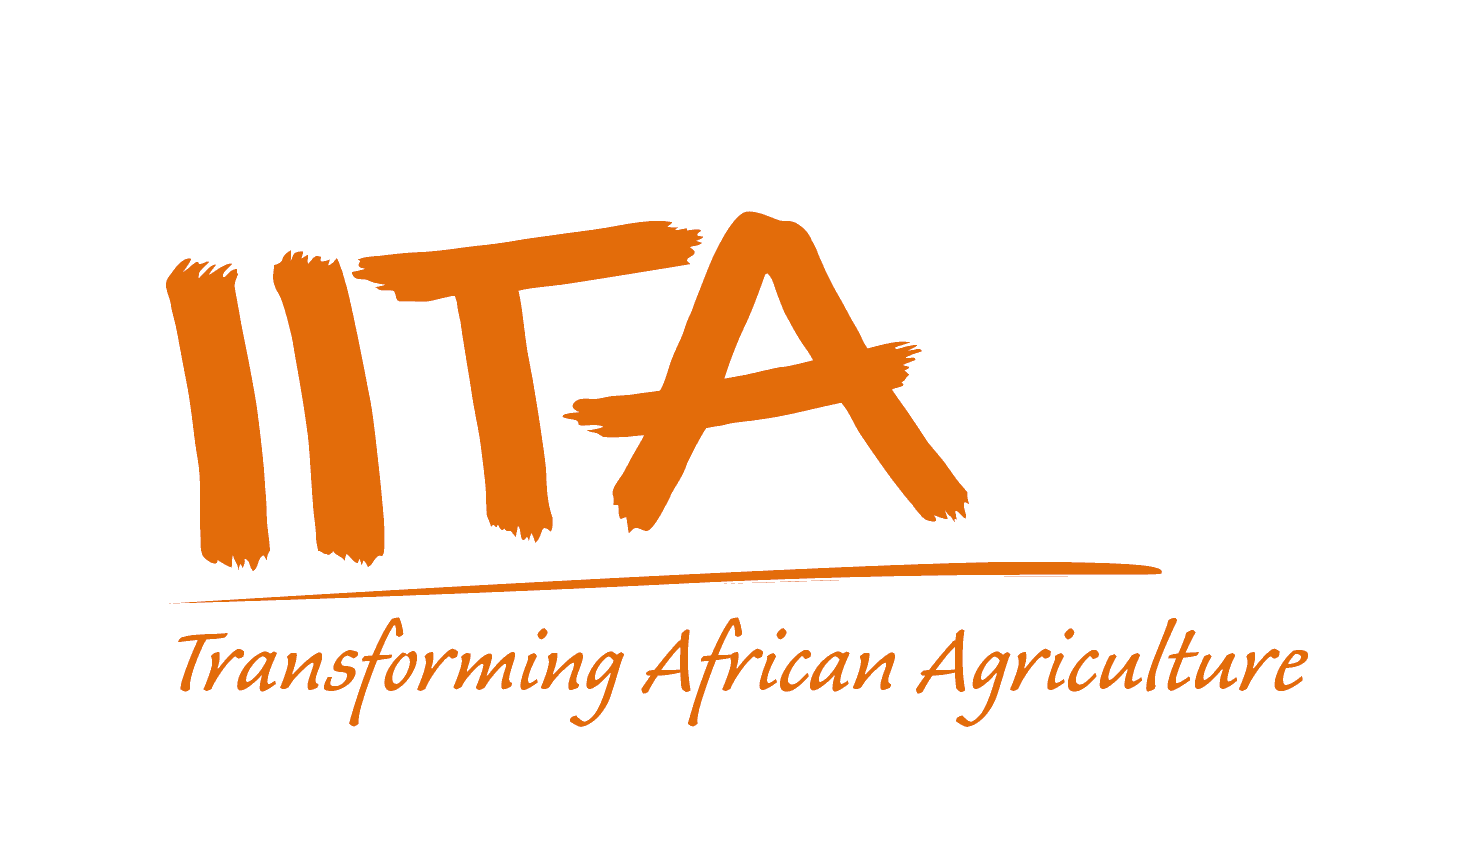 International Institute of Tropical Agriculture (IITA)